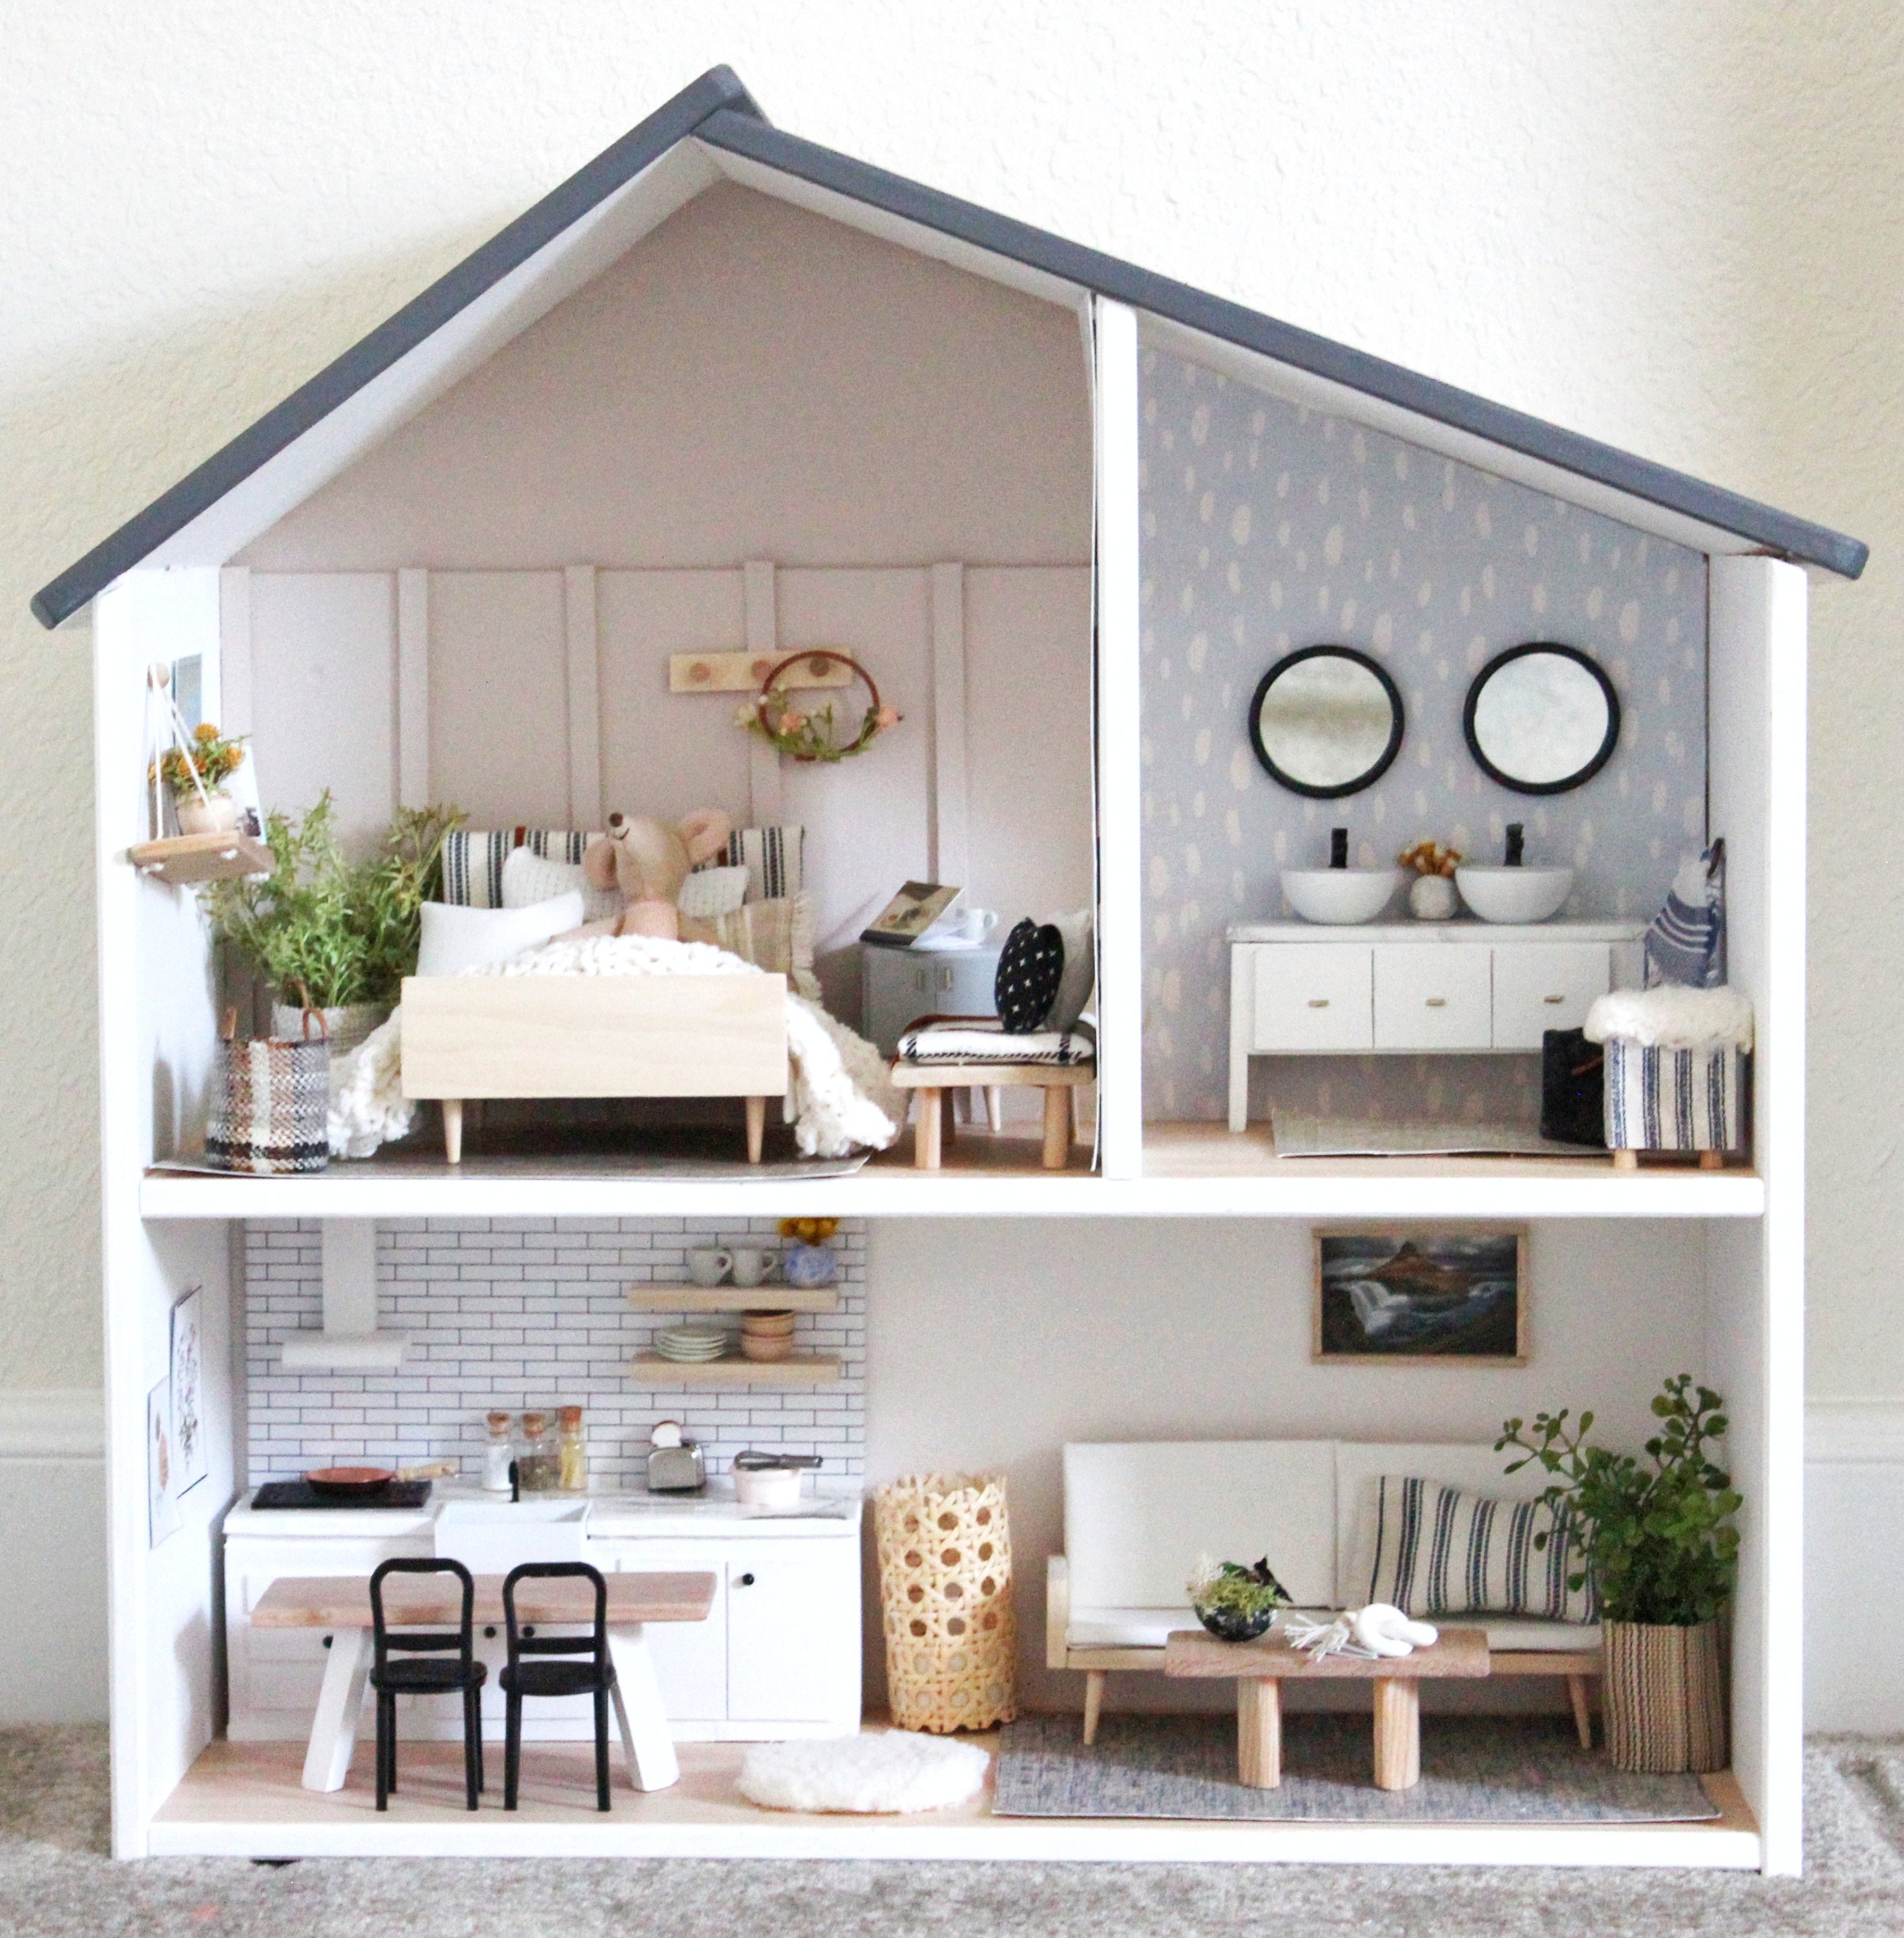 Dollhouse Totalmente Amueblado-Miniature Casa de muñecas - Etsy España